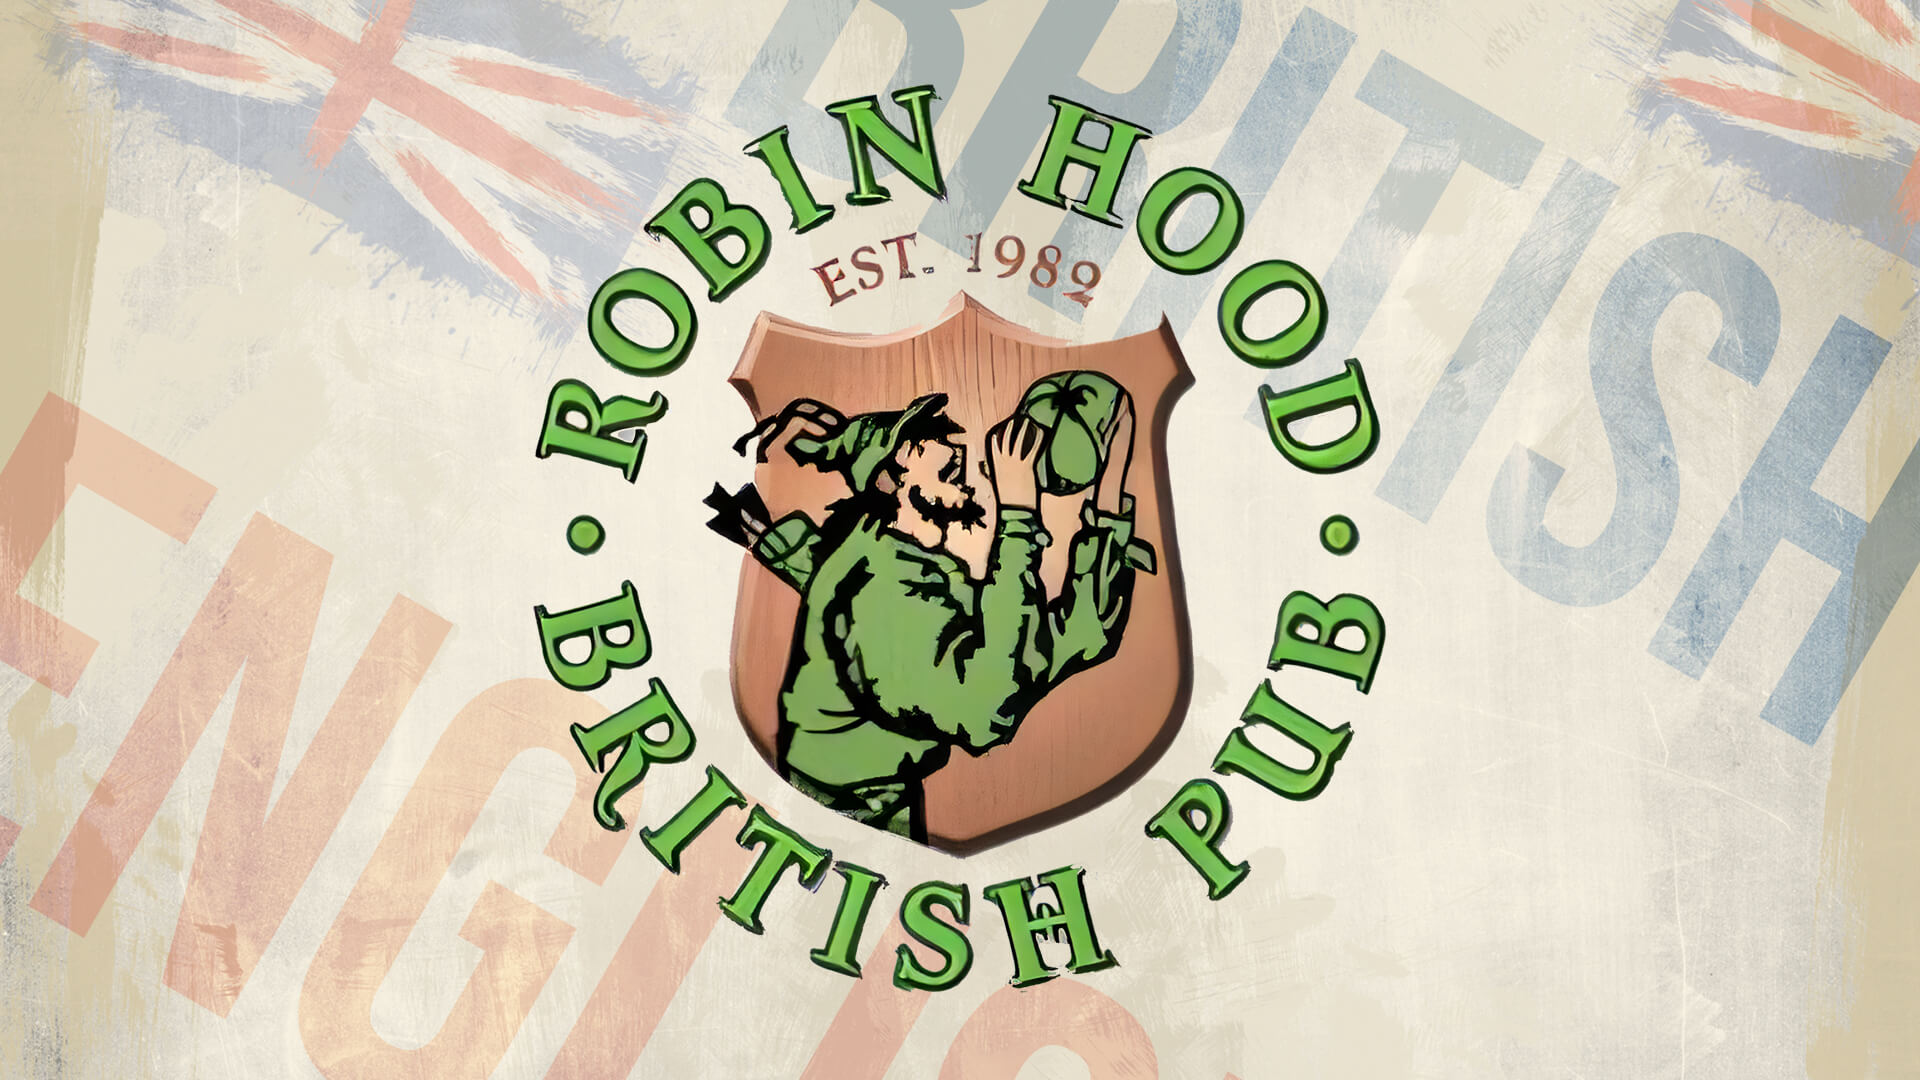 Robin Hood British Pub - Est. 1982